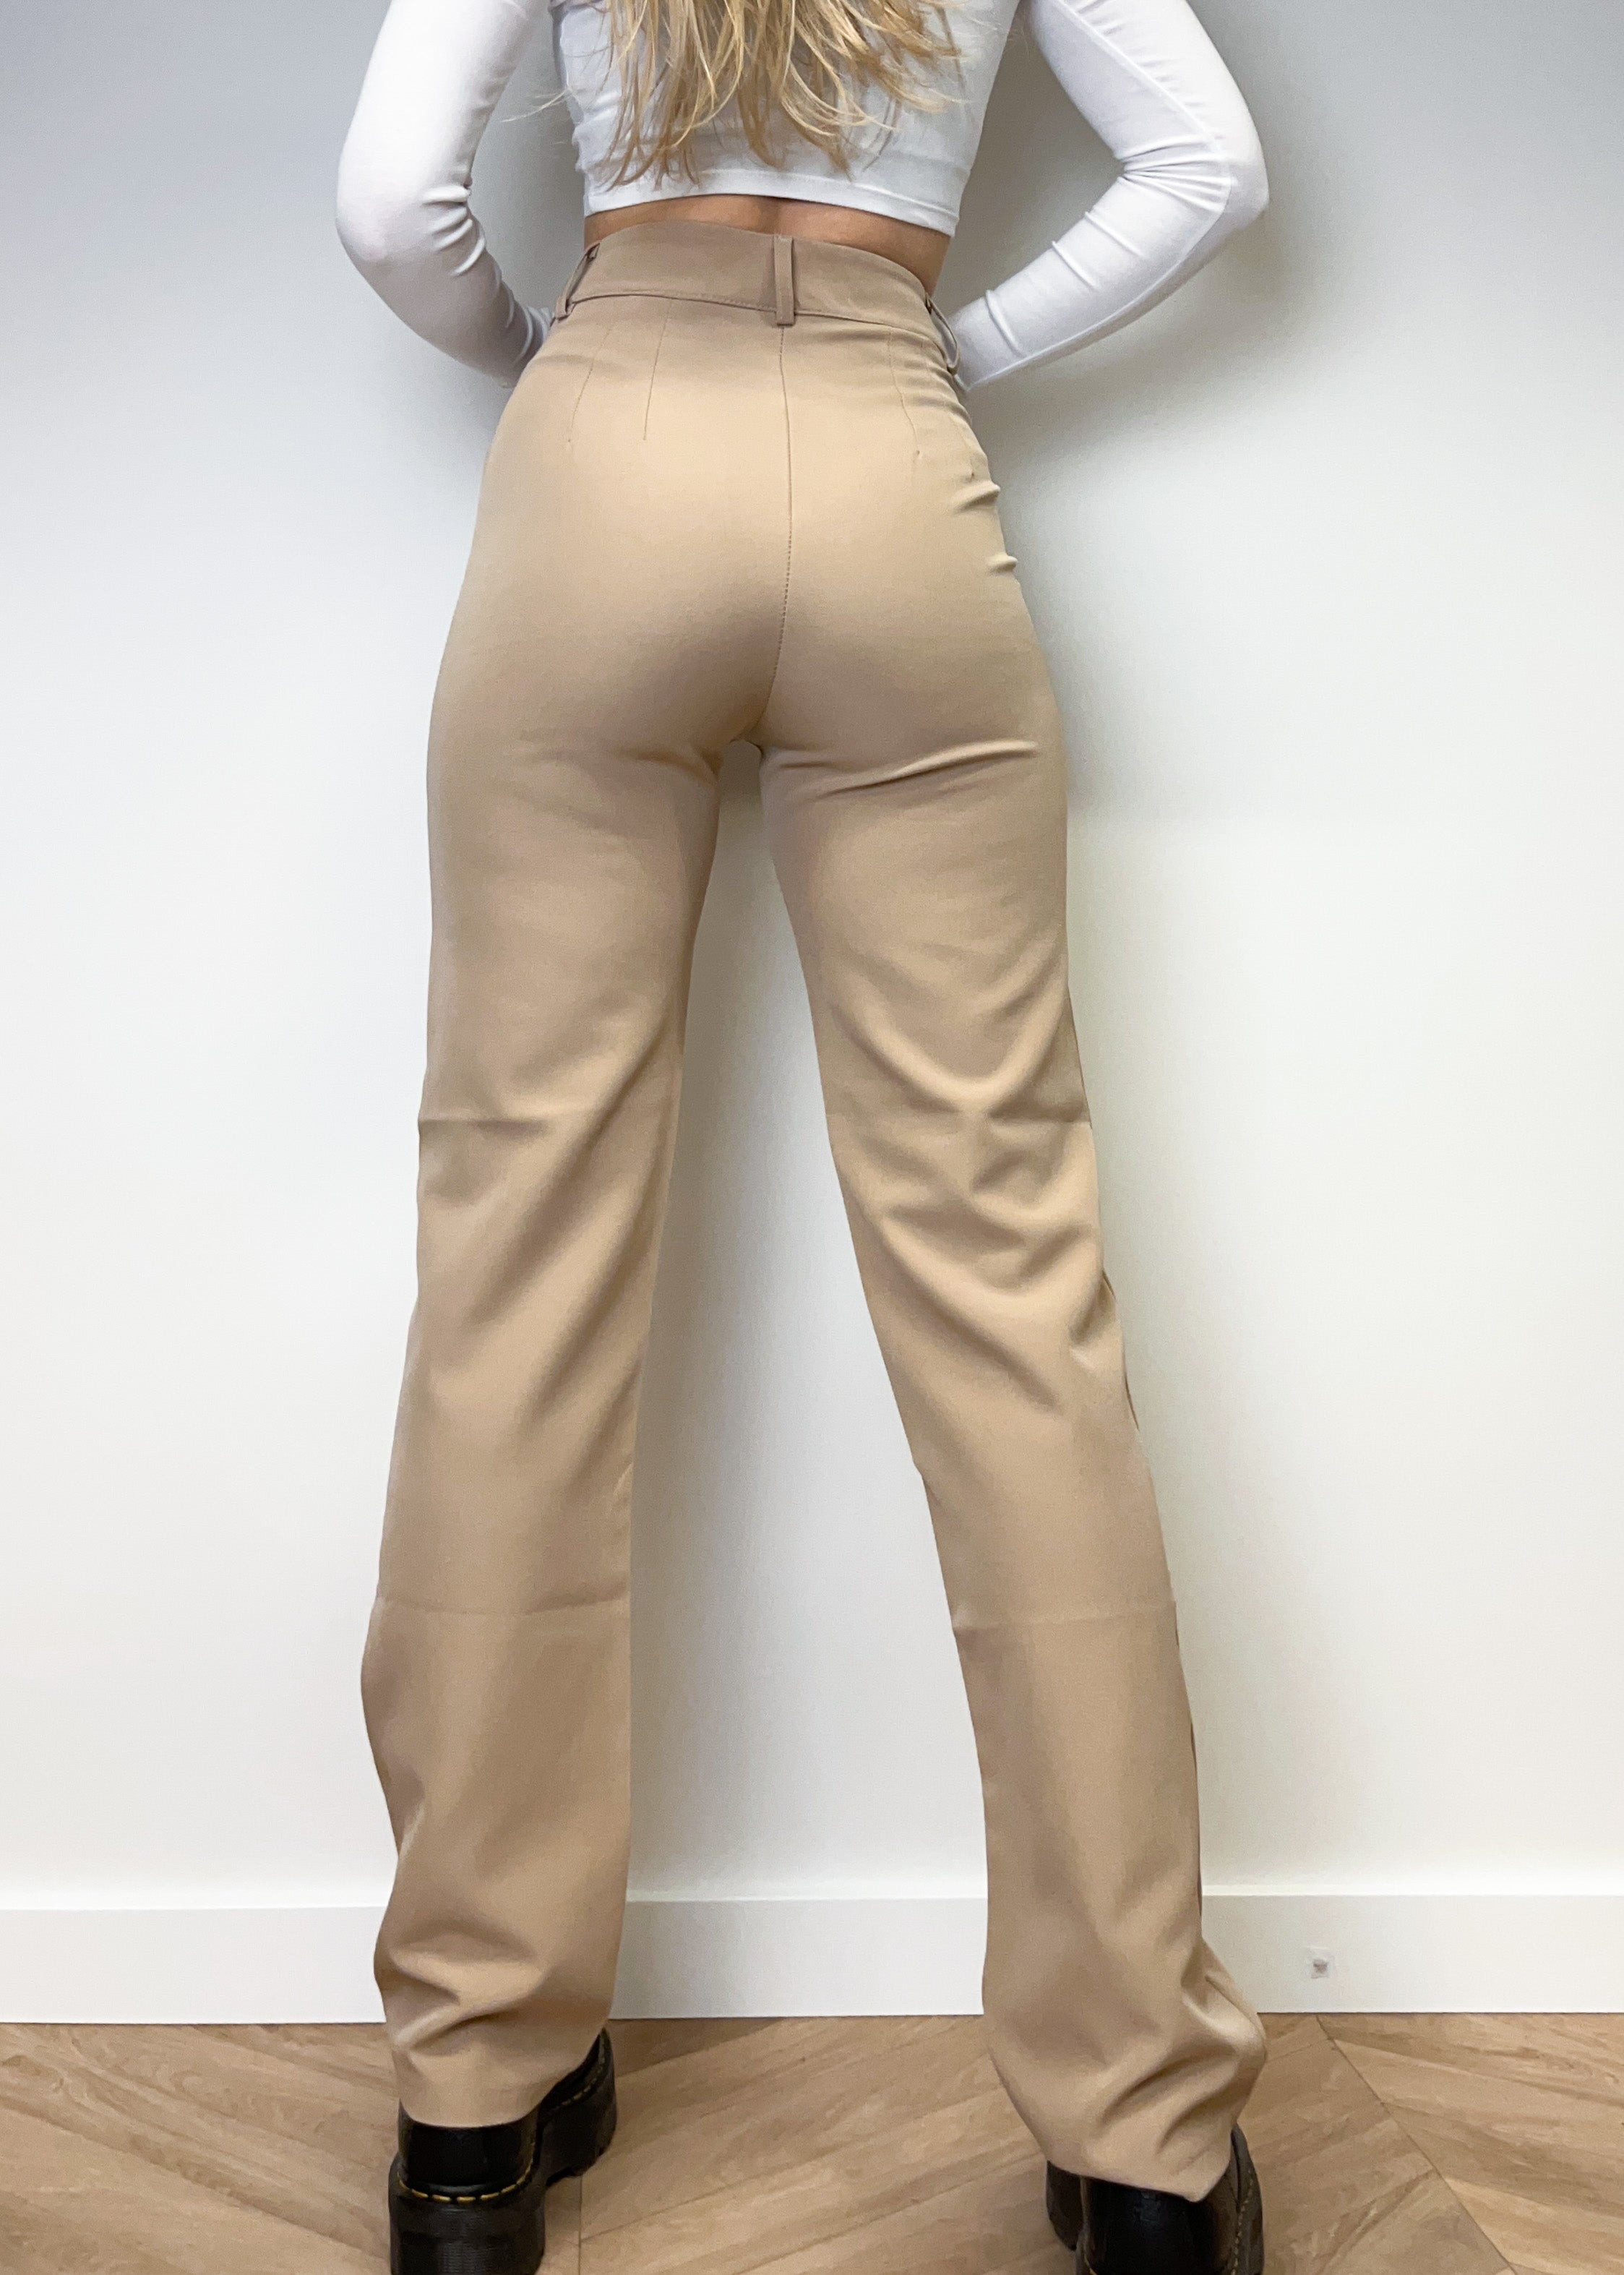 Straight leg pants classic beige (REGULAR)